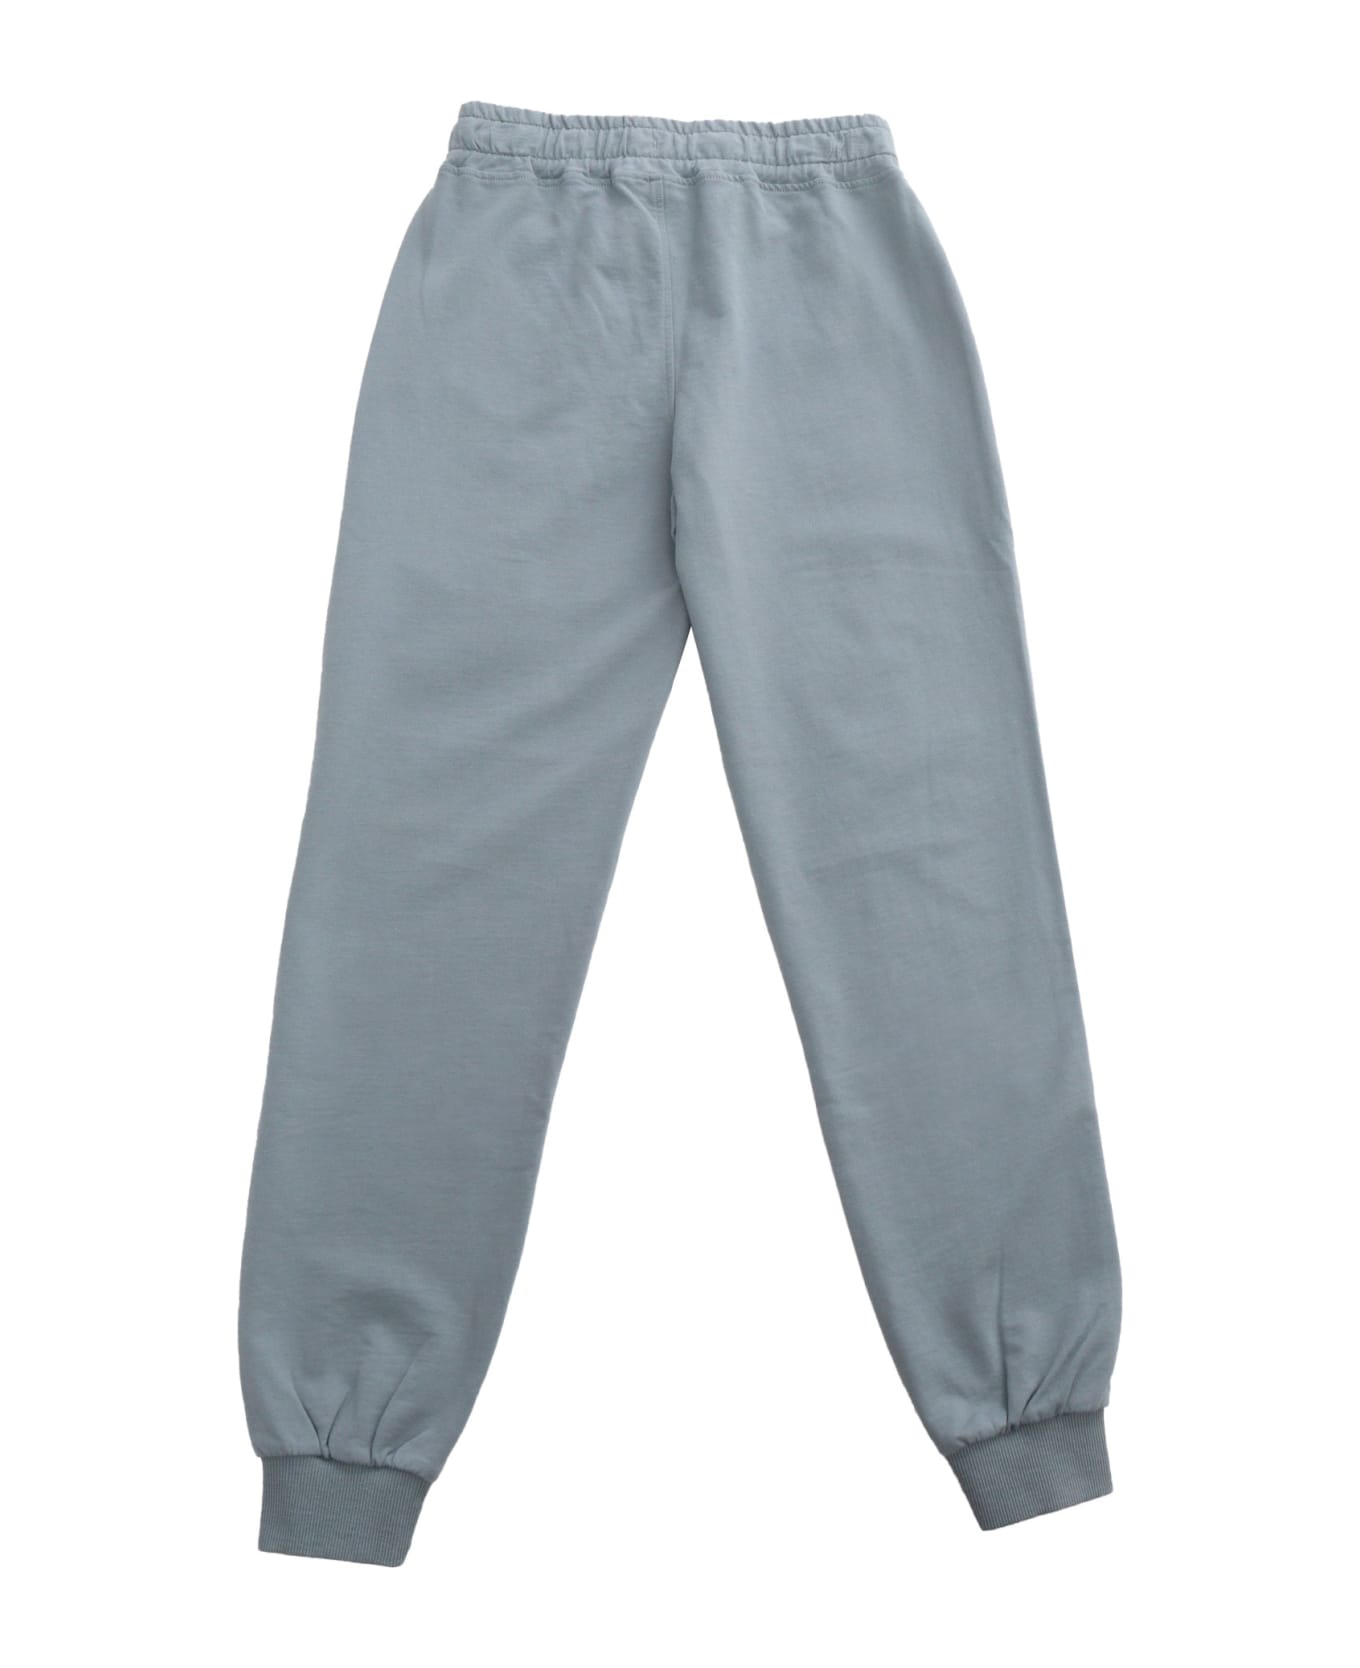 C.P. Company Undersixteen Grey Jogging Pants - GREY